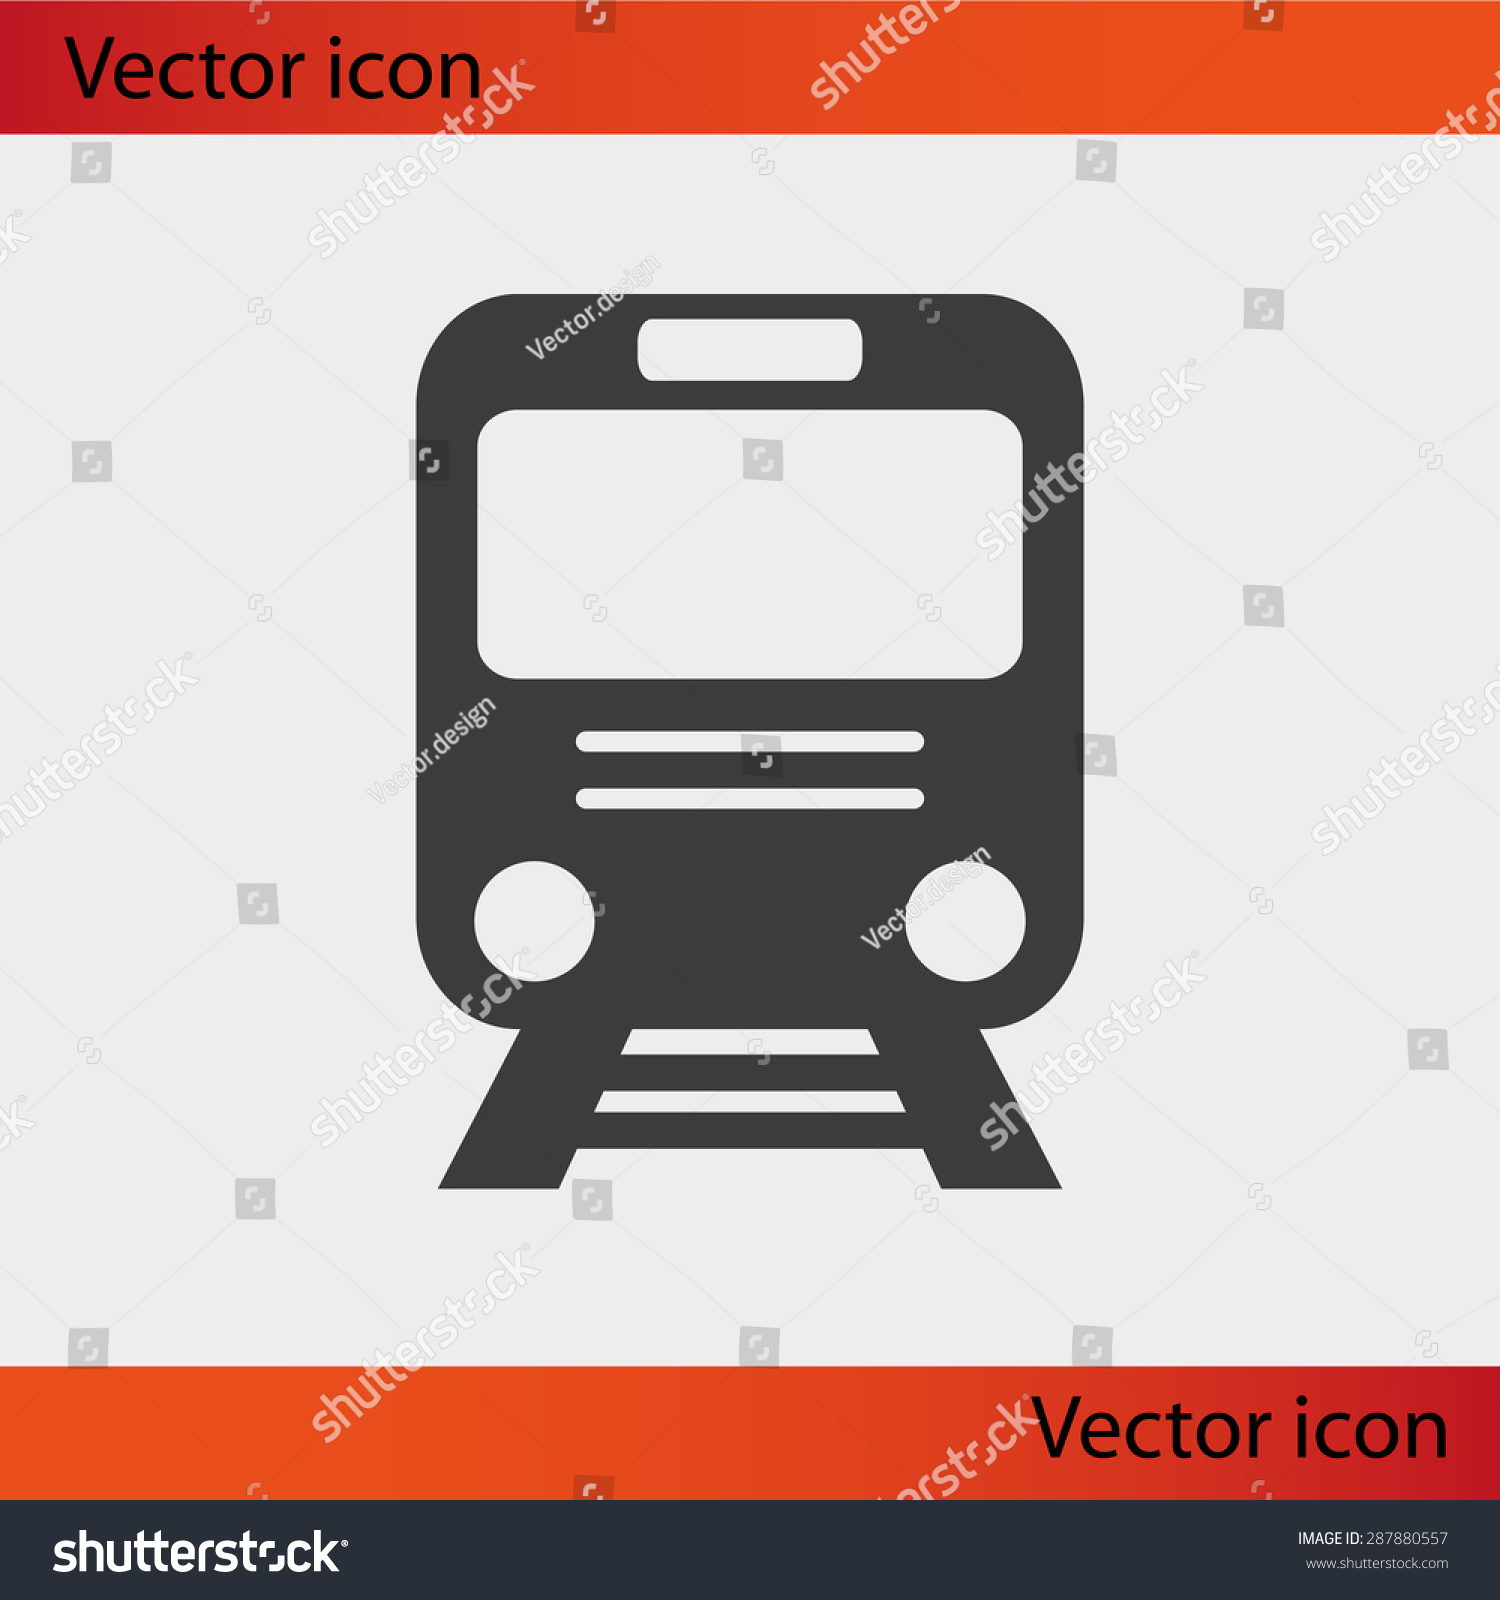 Train vector icon #287880557